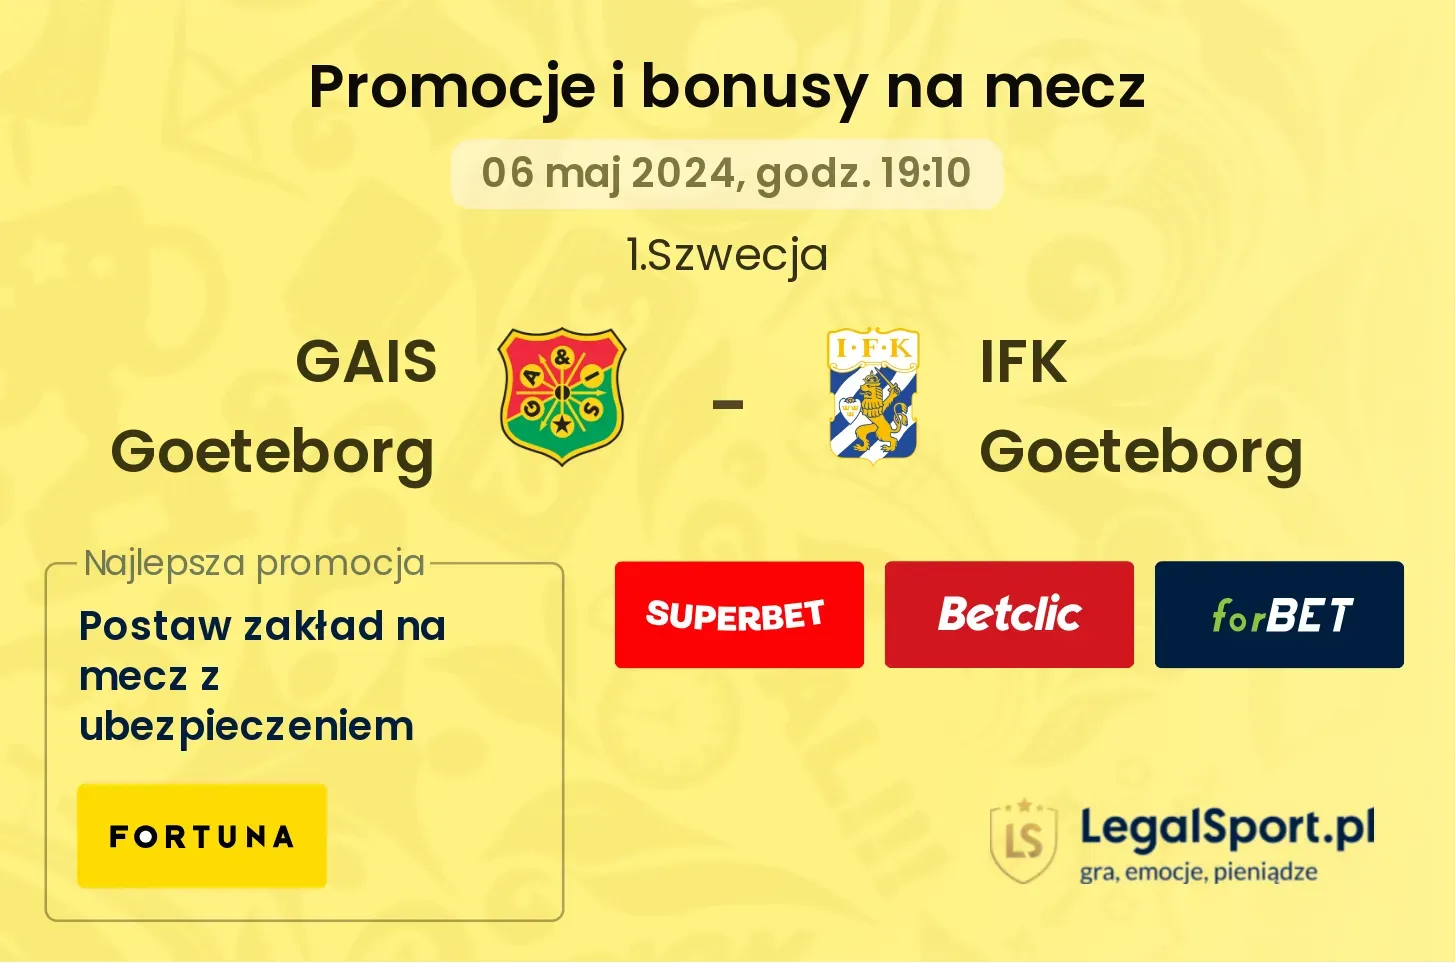 GAIS Goeteborg - IFK Goeteborg promocje bonusy na mecz